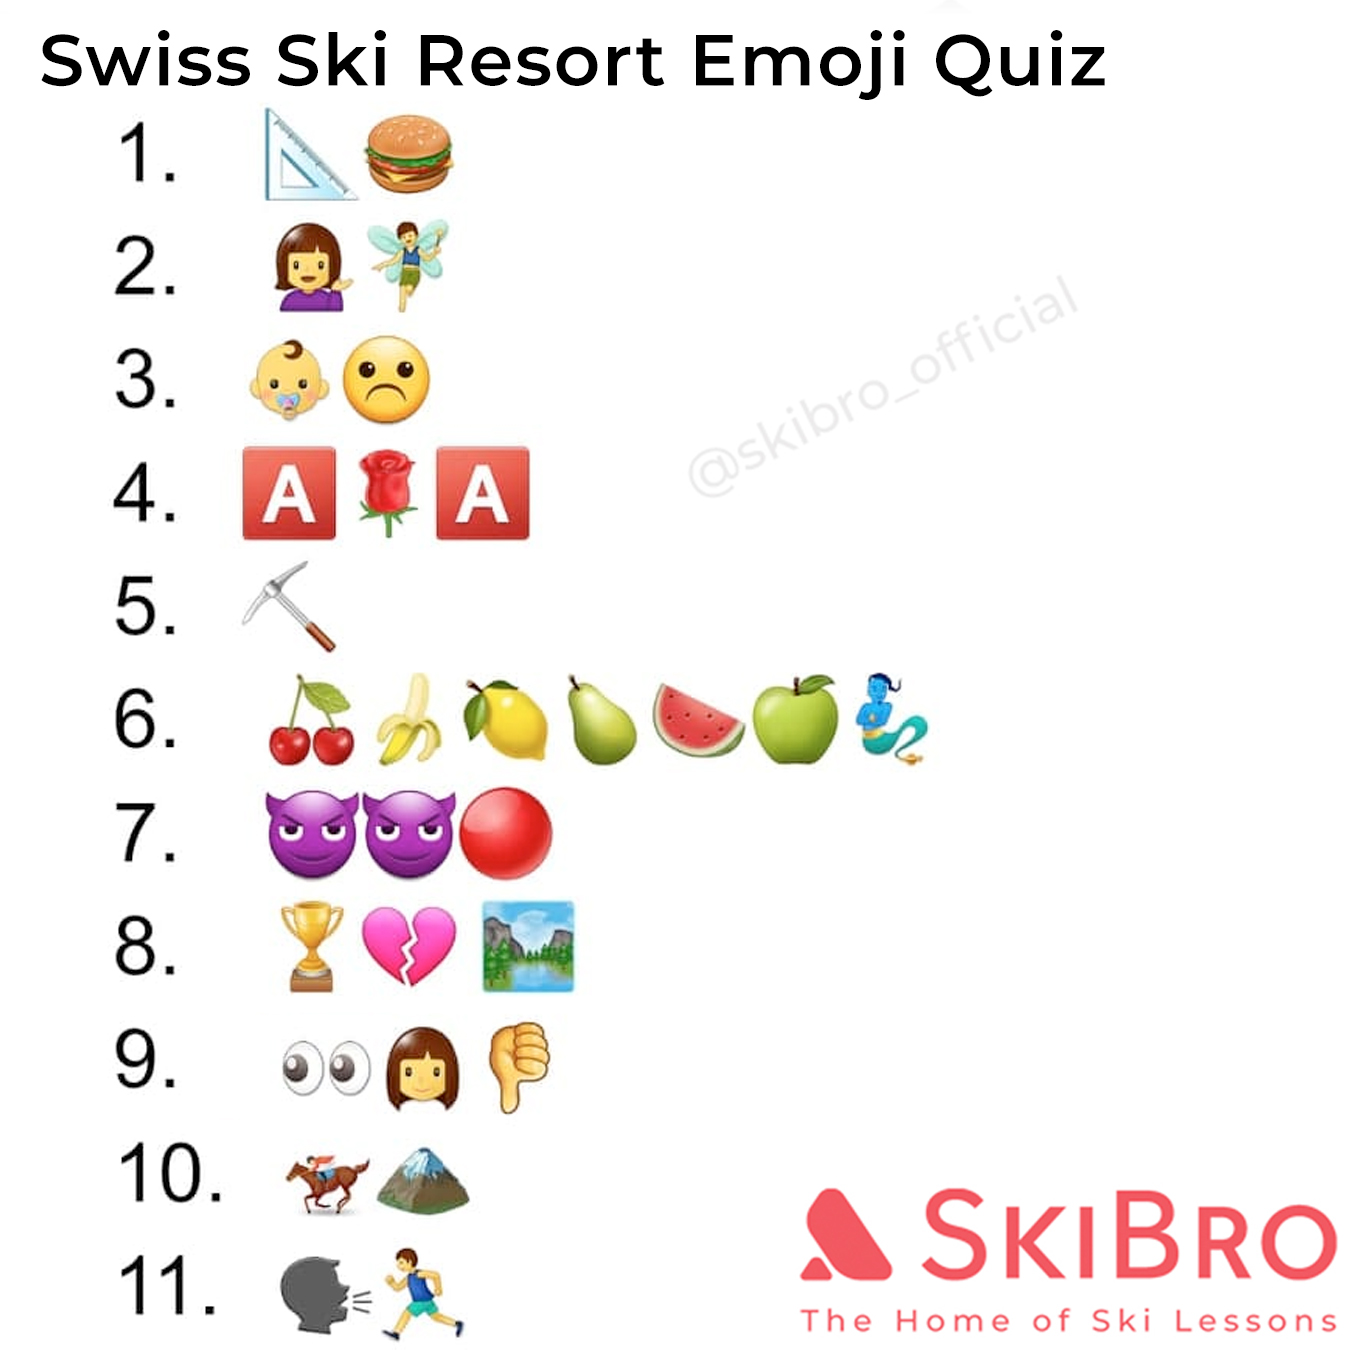 emoji quiz of 10 popular swiss ski resorts